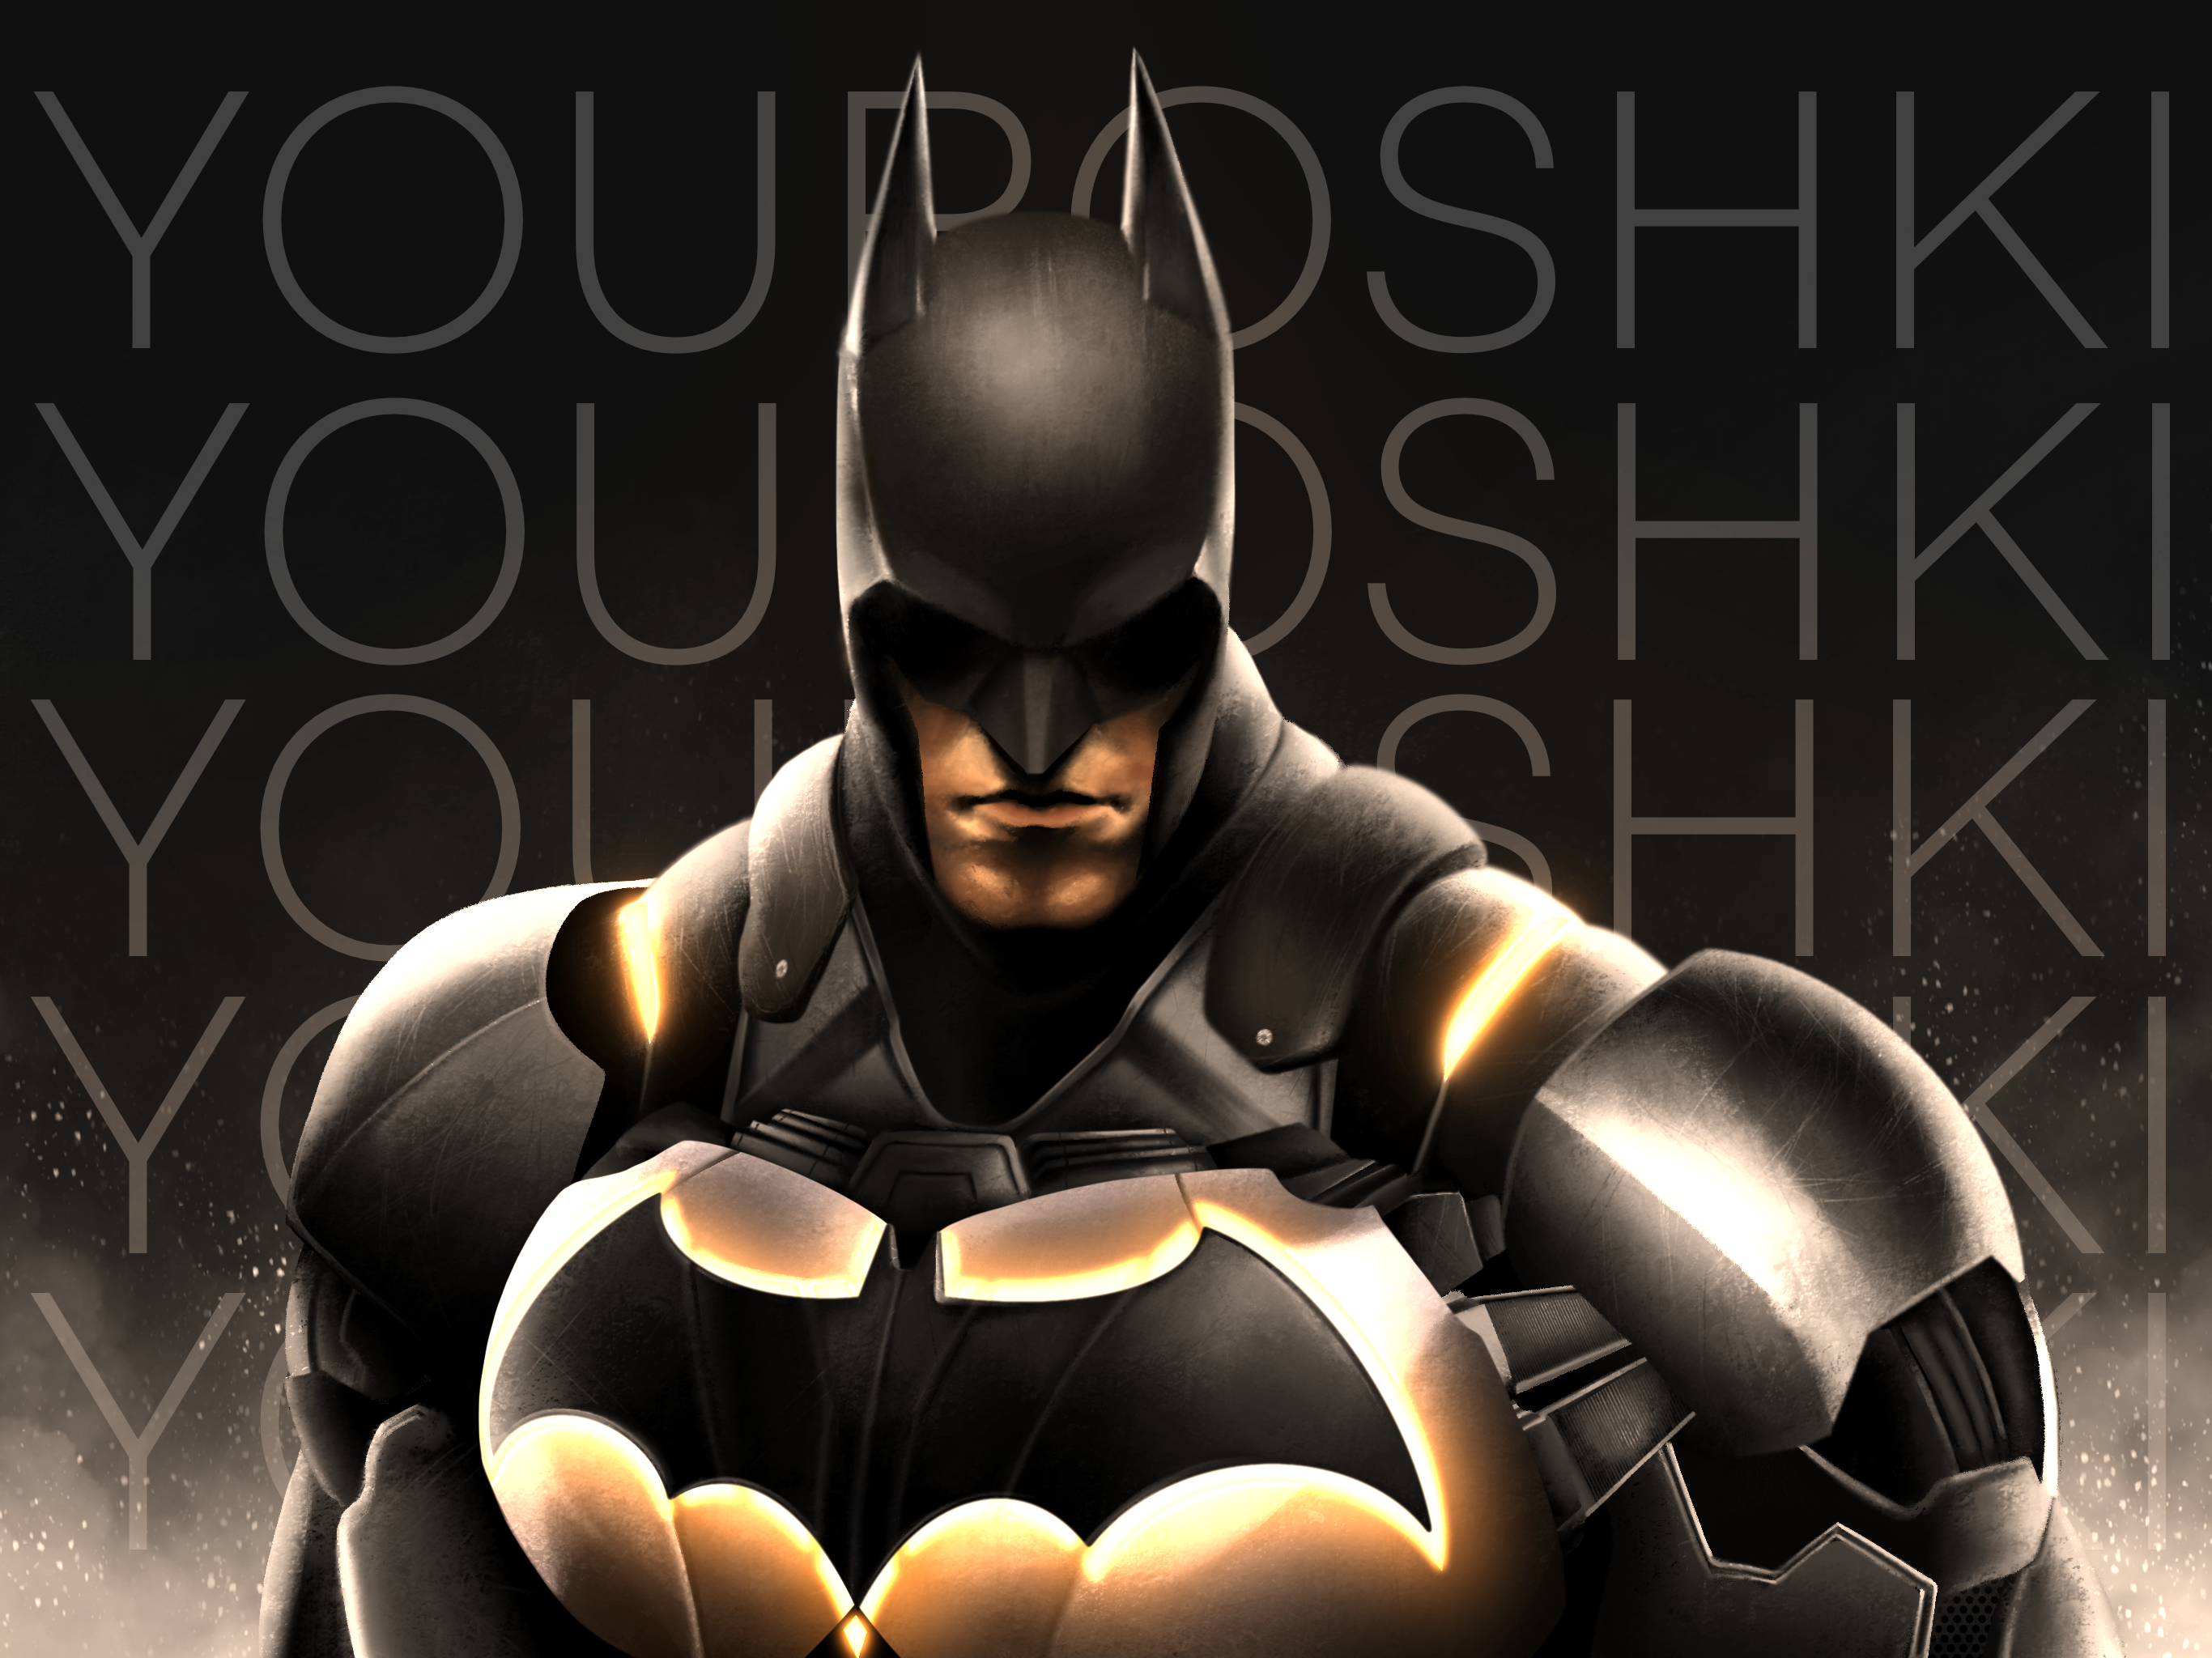 Batman Realistic Digital Artwork by Youroshki on DeviantArt